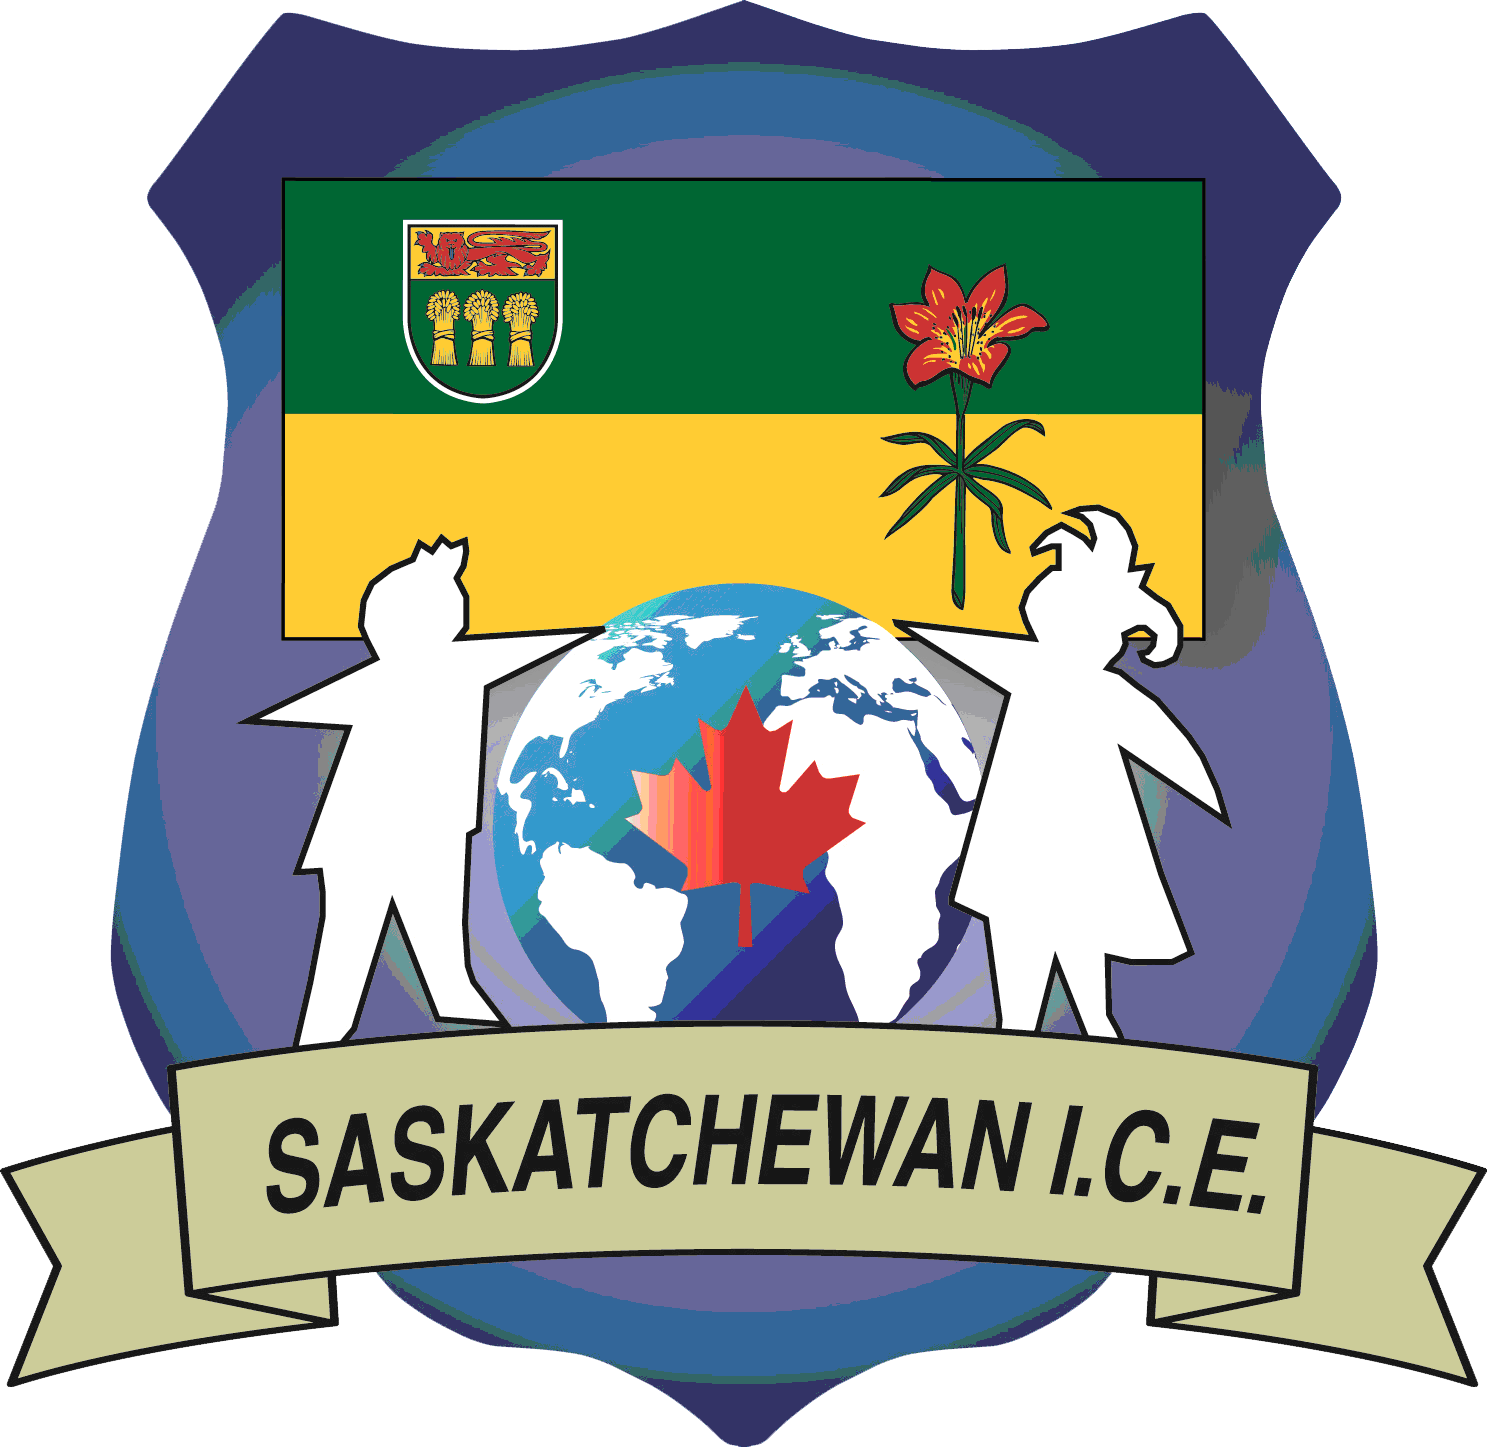 On Wednesday, January 7, 2015, Members From The Saskatchewan - Saskatchewan Flag Metal Novelty License Plate Lp-5215 (1487x1447)